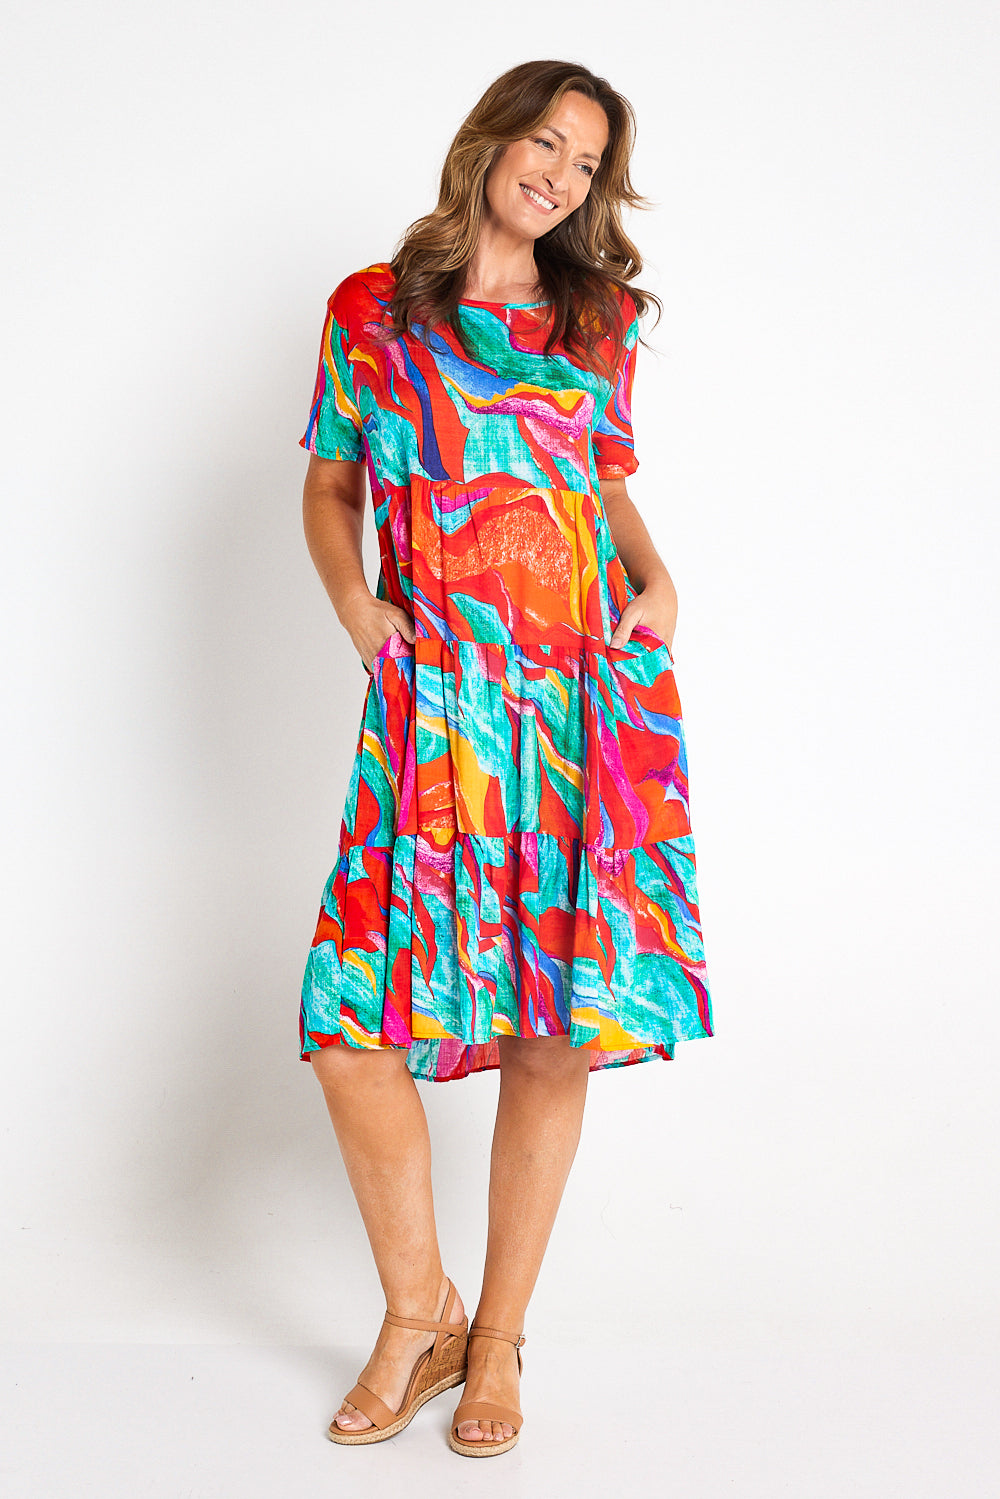 Bellissima Cotton Dress - Fire & Sea  Sophia Summer Clothes for Women –  TULIO Fashion